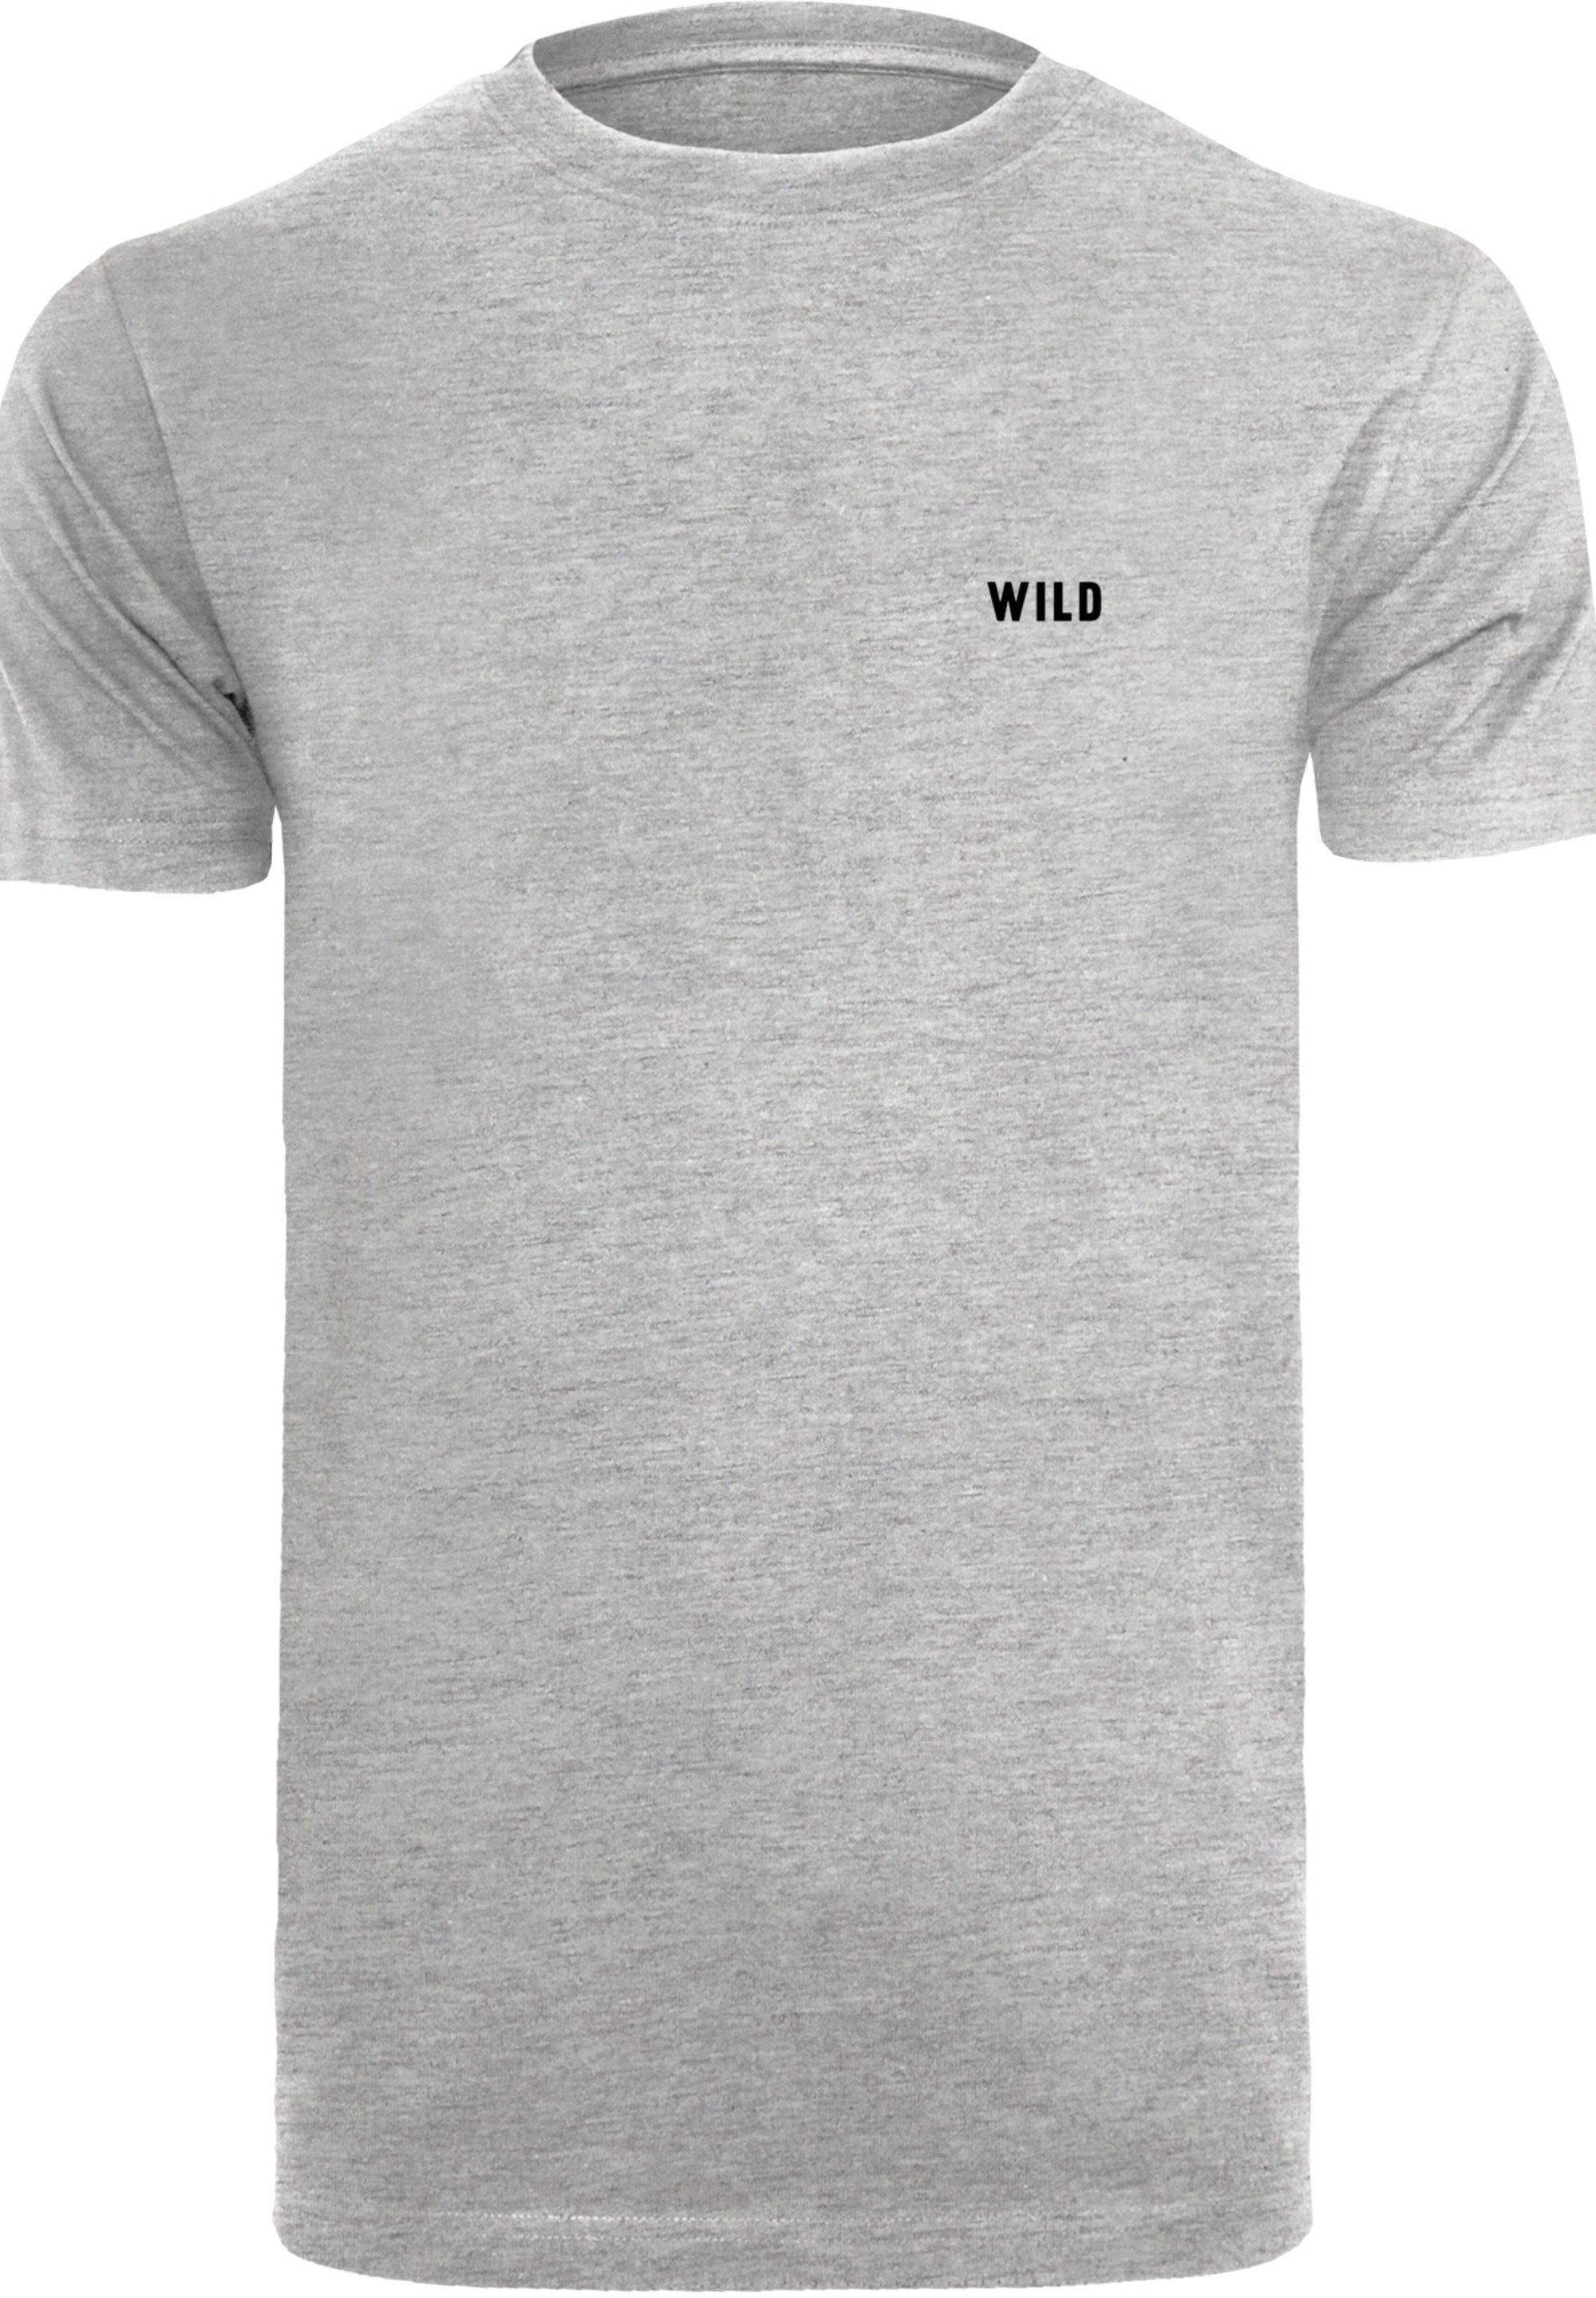 T-Shirt Wild slang Jugendwort grey heather F4NT4STIC 2022,